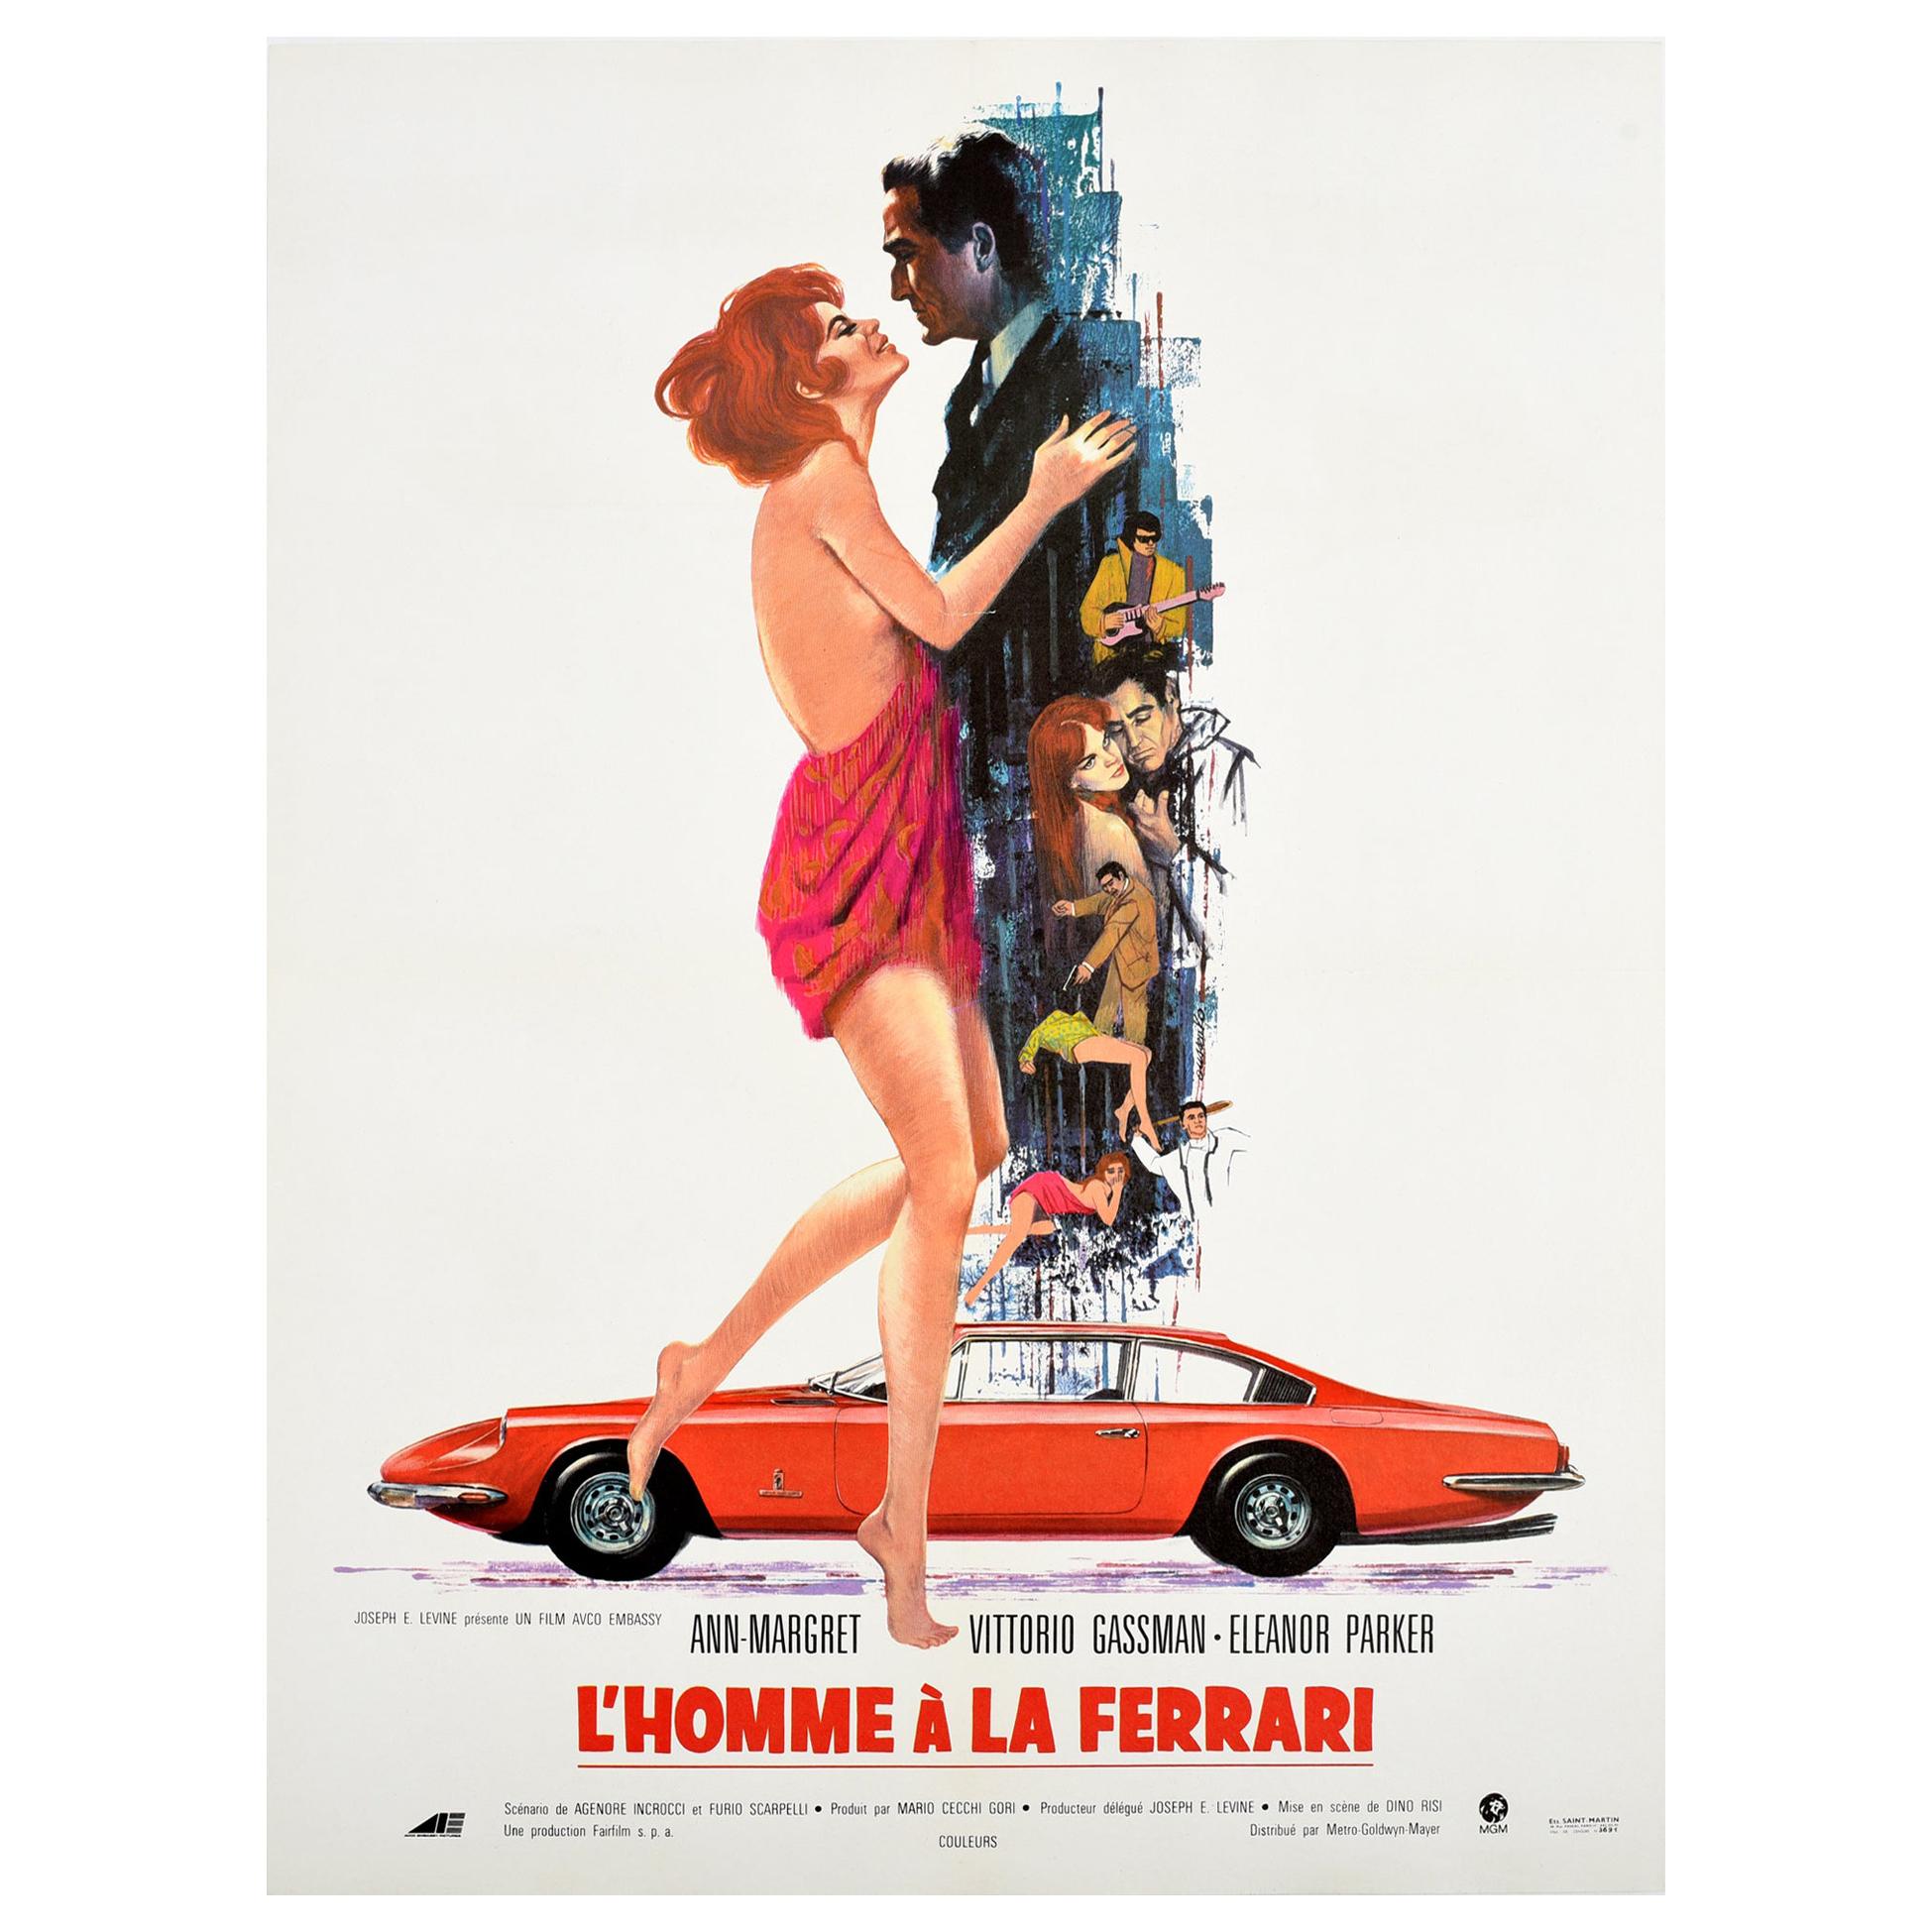 Original Vintage Film Poster For L'Homme A La Ferrari The Tiger And The Pussycat